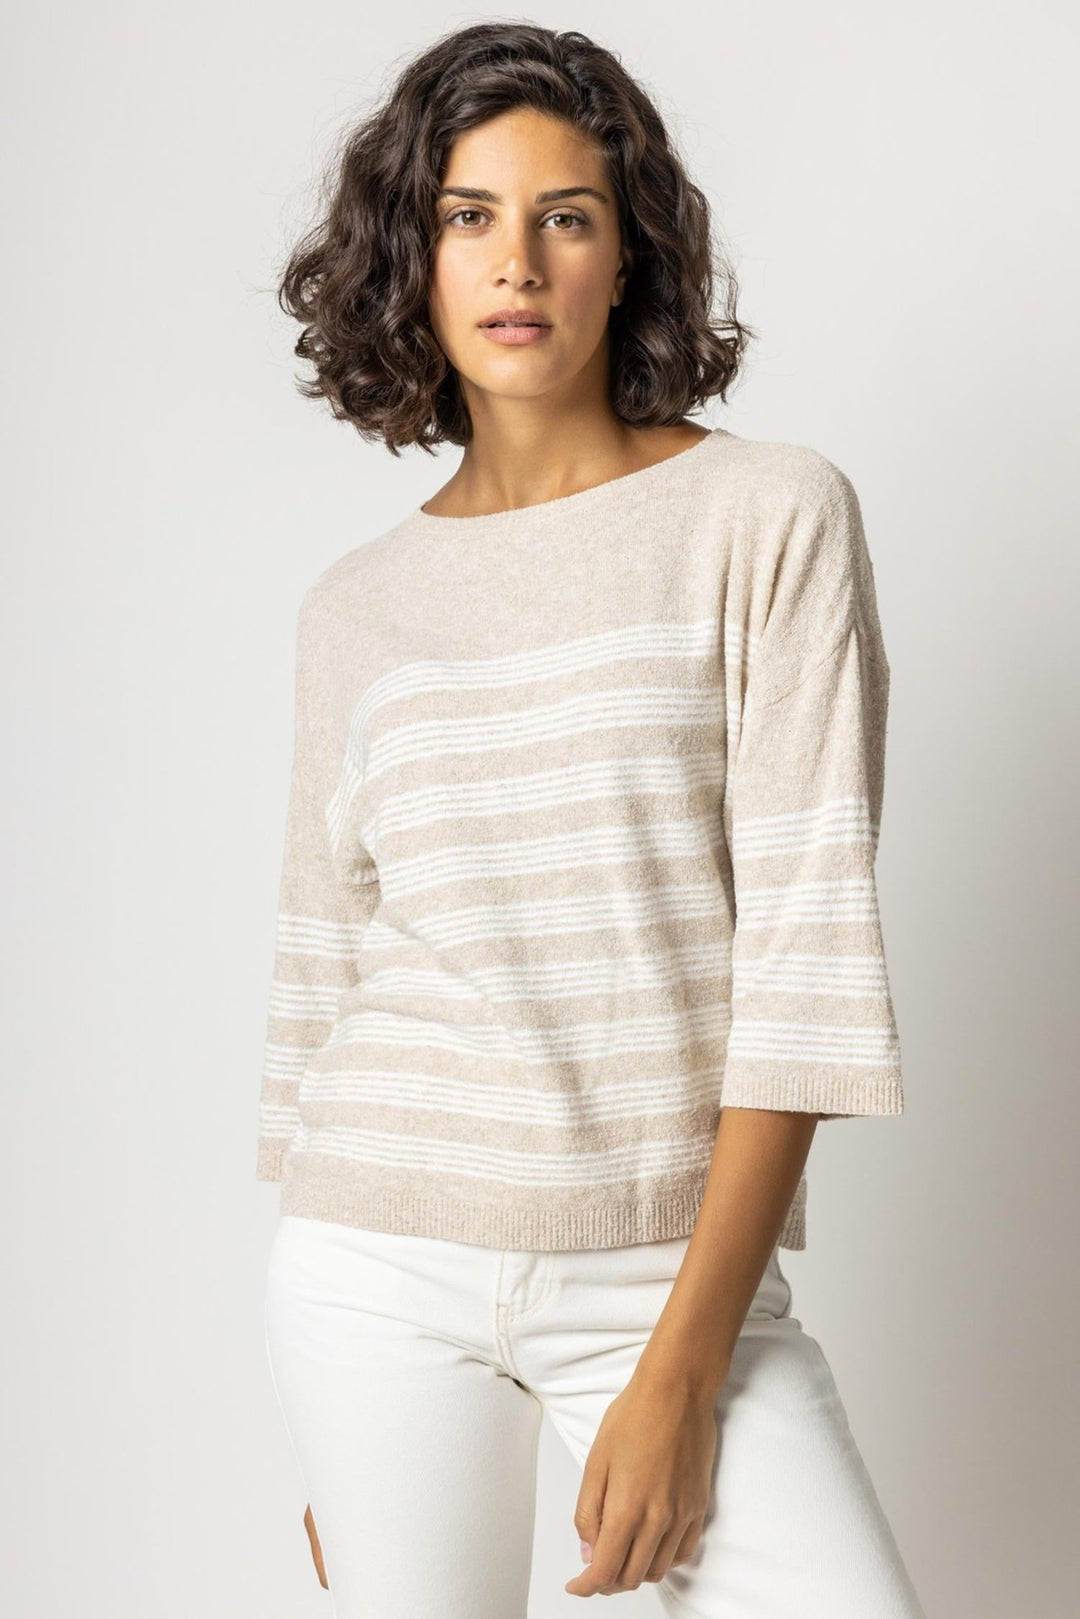 Lilla P - Oversized 3/4 Slv Boatneck Stripe Sweater: Oat - Shorely Chic Boutique